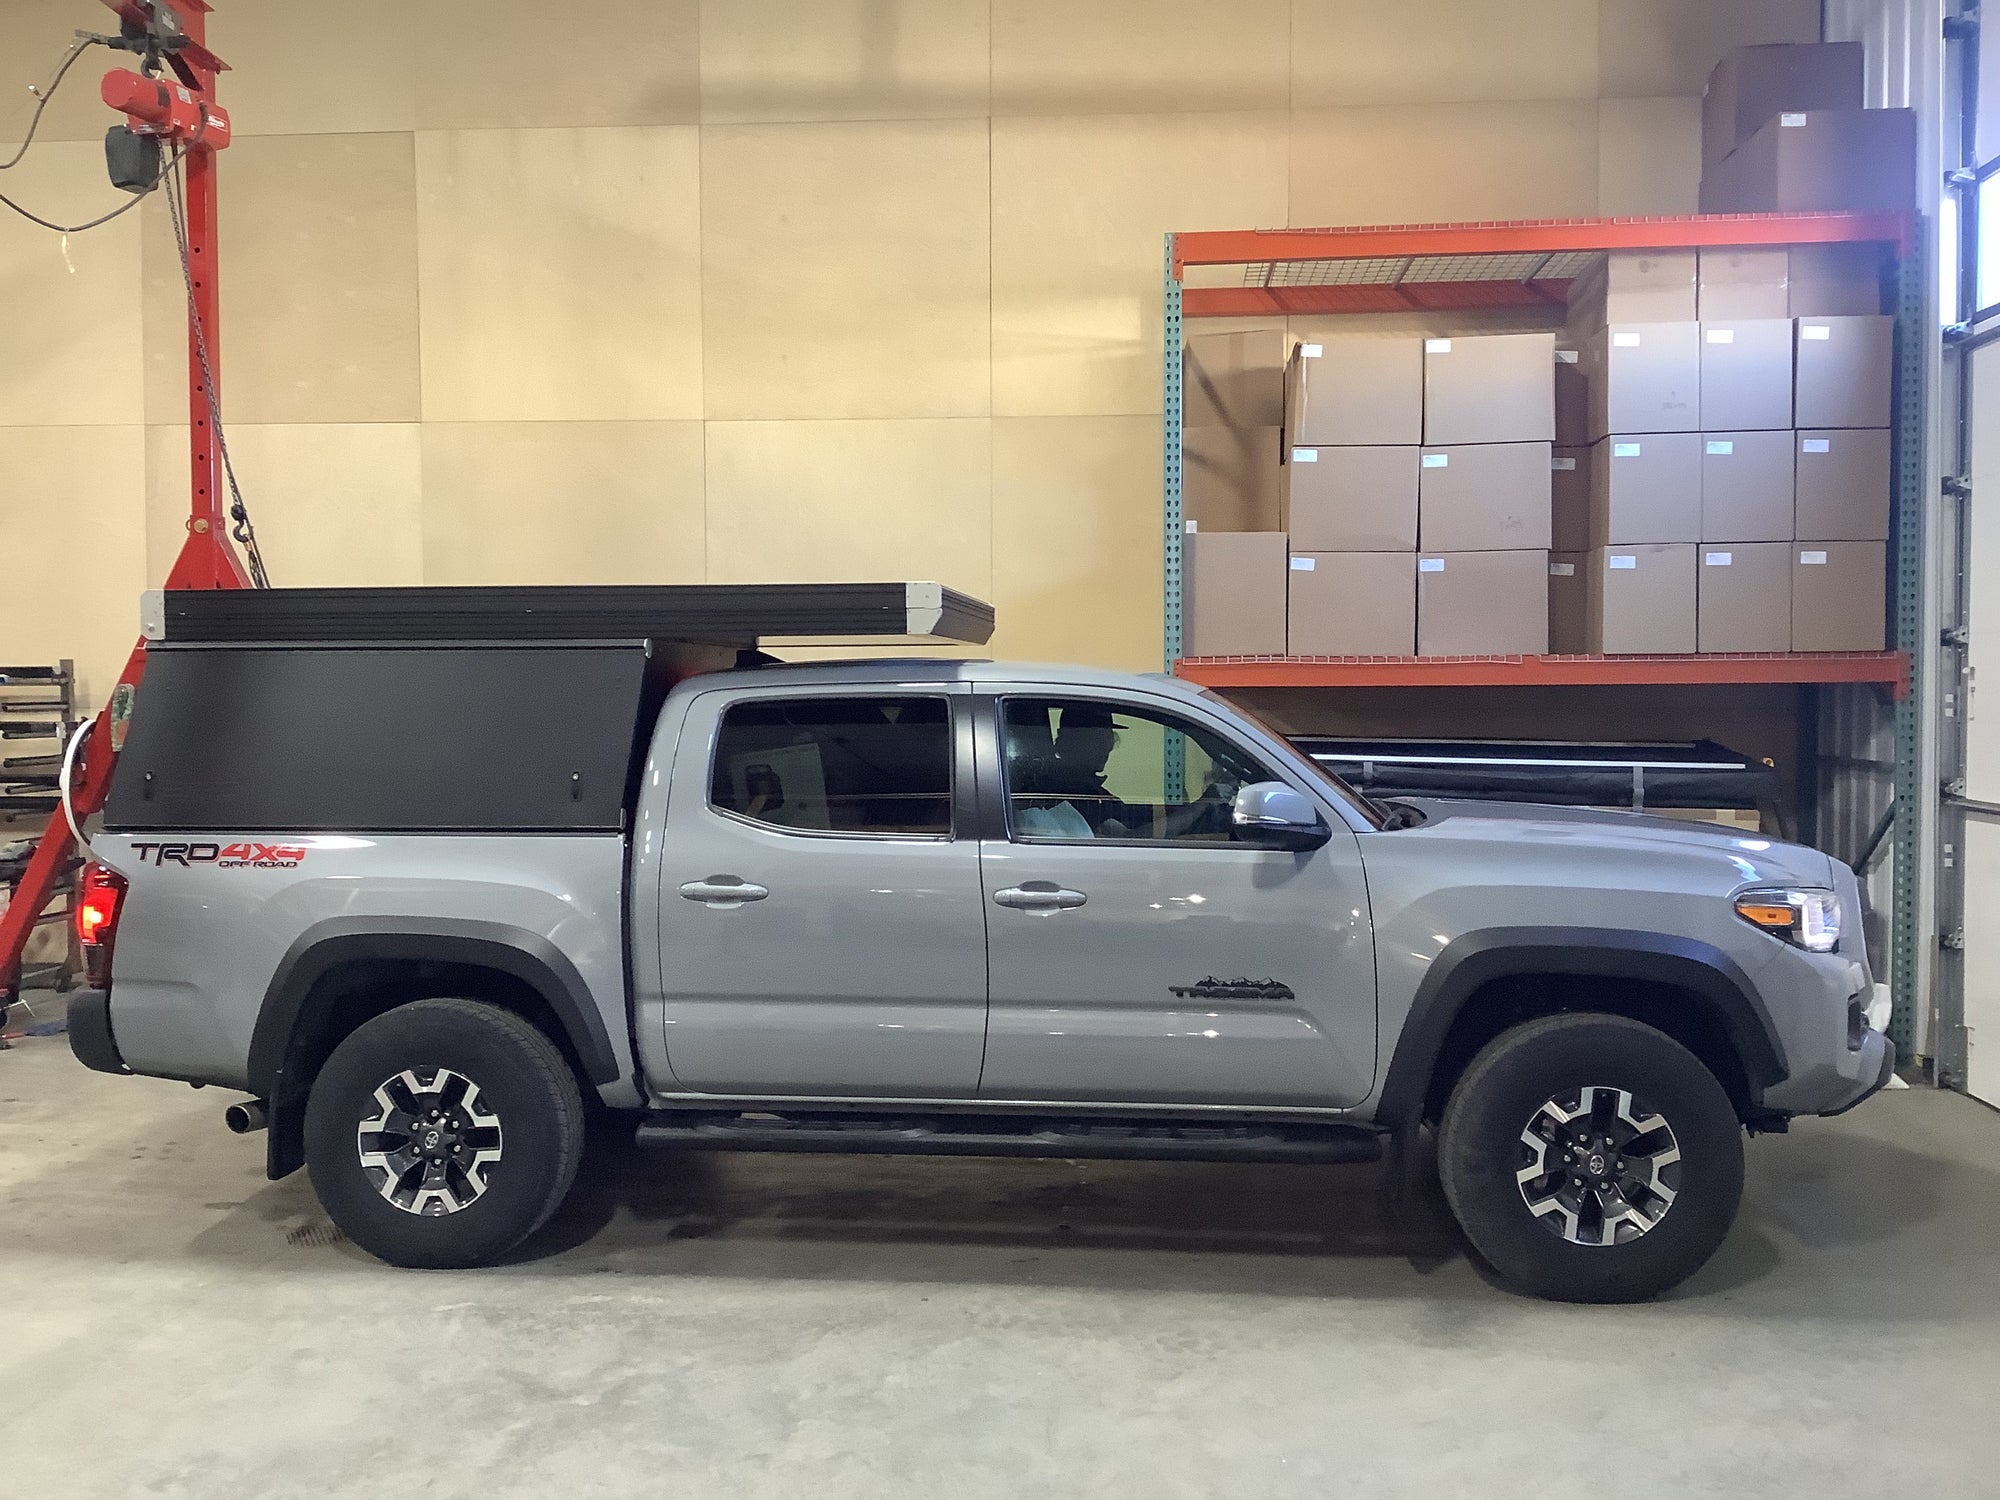 2019 Toyota Tacoma Camper - Build #3090